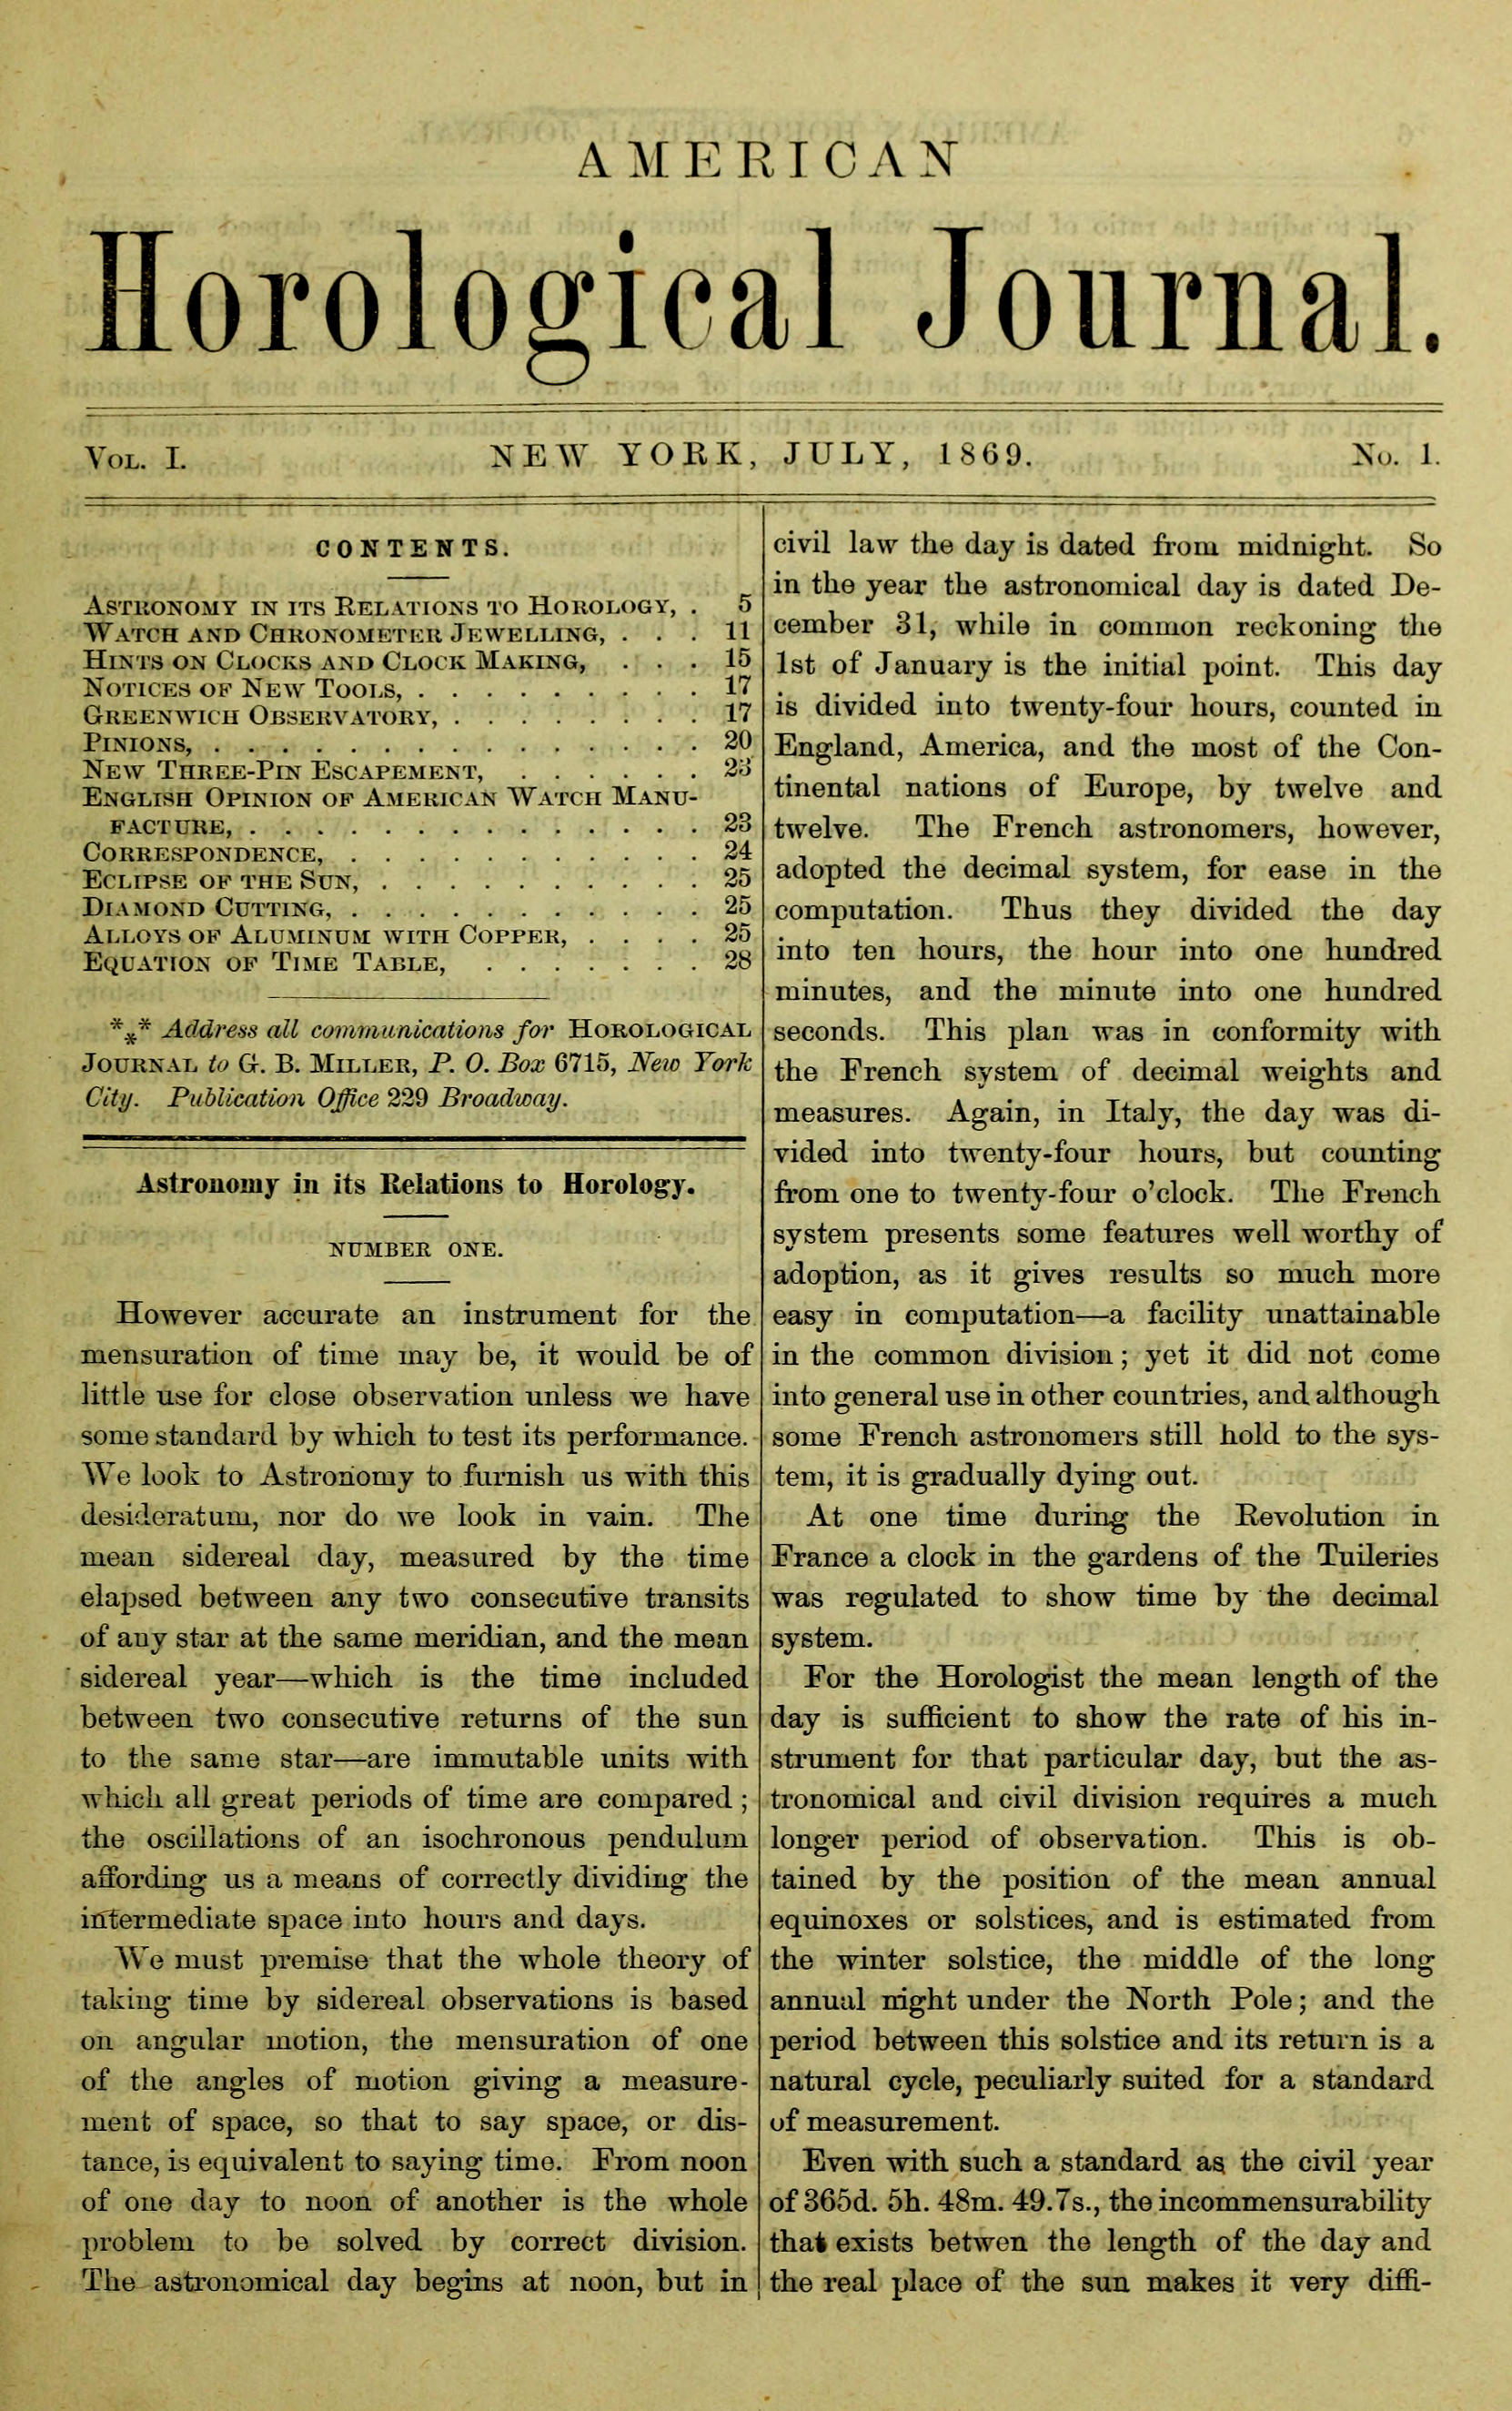 American Horological Journal, Vol. I, No. 1, July 1869: Devoted to Pratical Horology